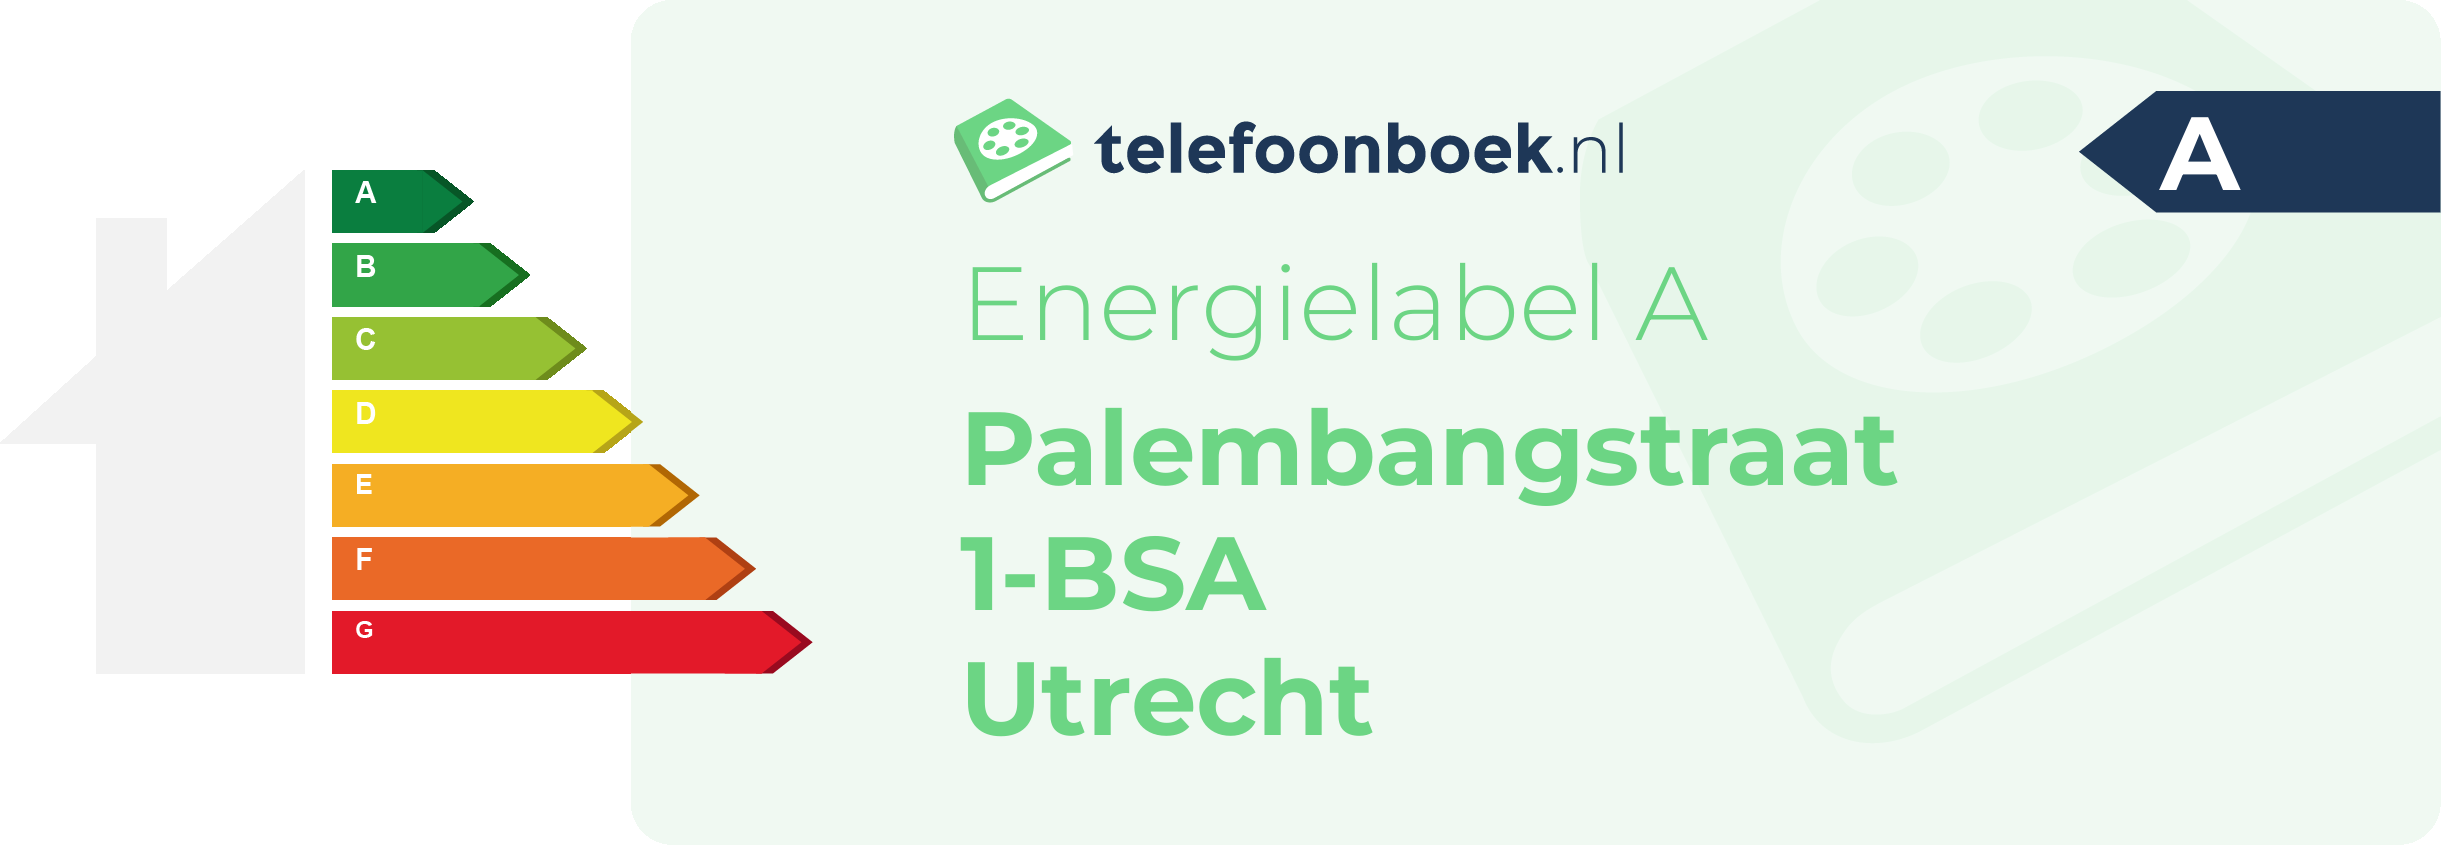 Energielabel Palembangstraat 1-BSA Utrecht